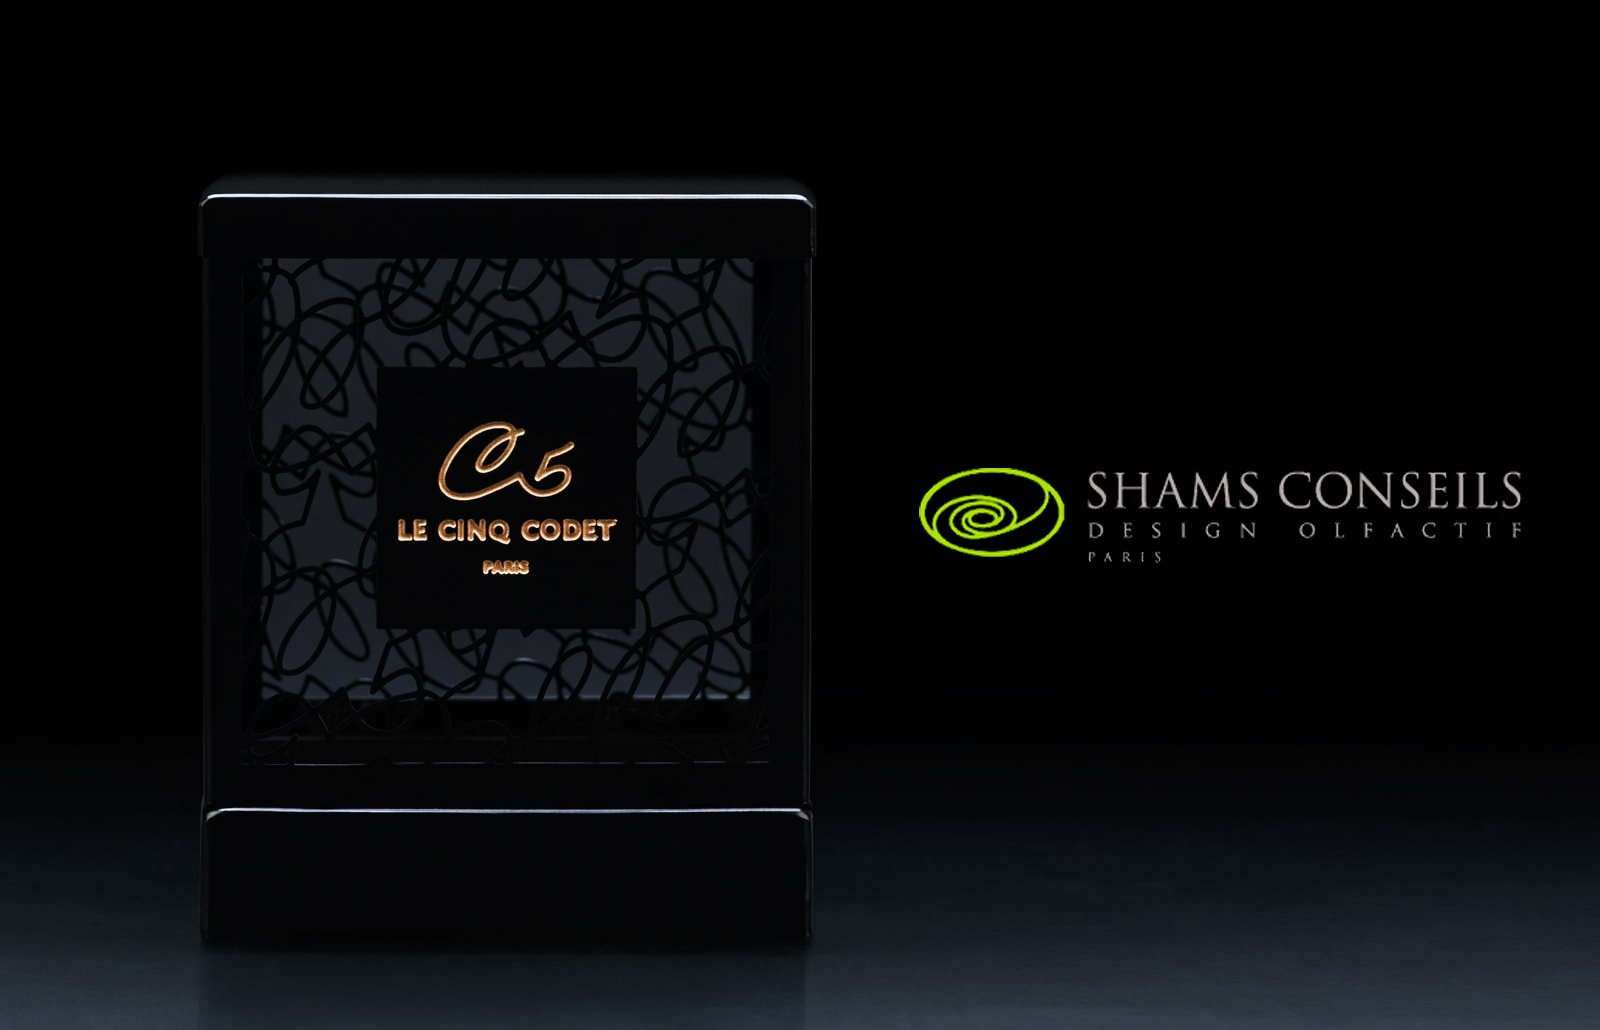 Shams Conseils Fragrance Designer Packshot Bougie Cinq Codet par Adrien THIBAULT, Photographe Freelance Made in France à Paris